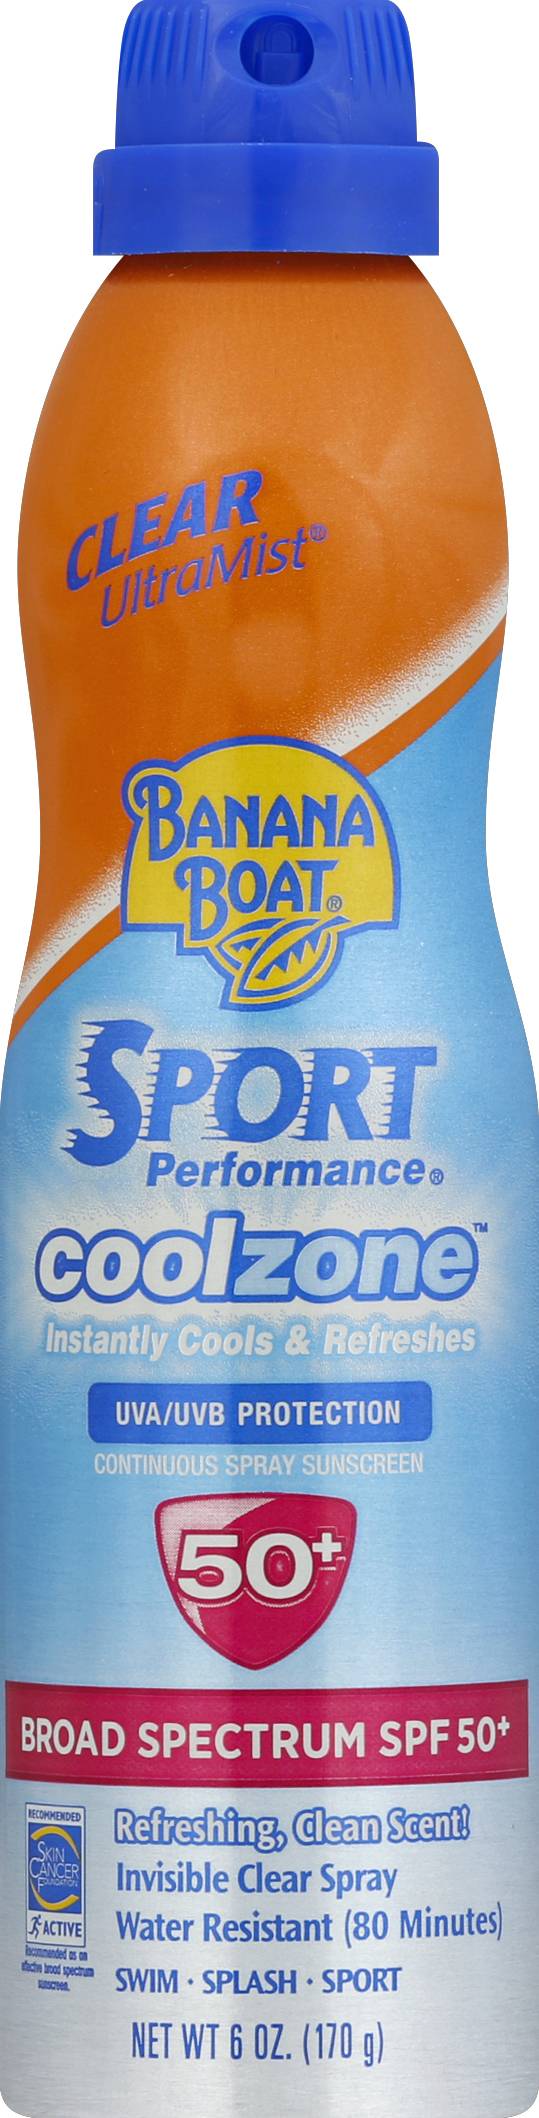 Banana Boat Sport Coolzone Spf 50+ Sunscreen